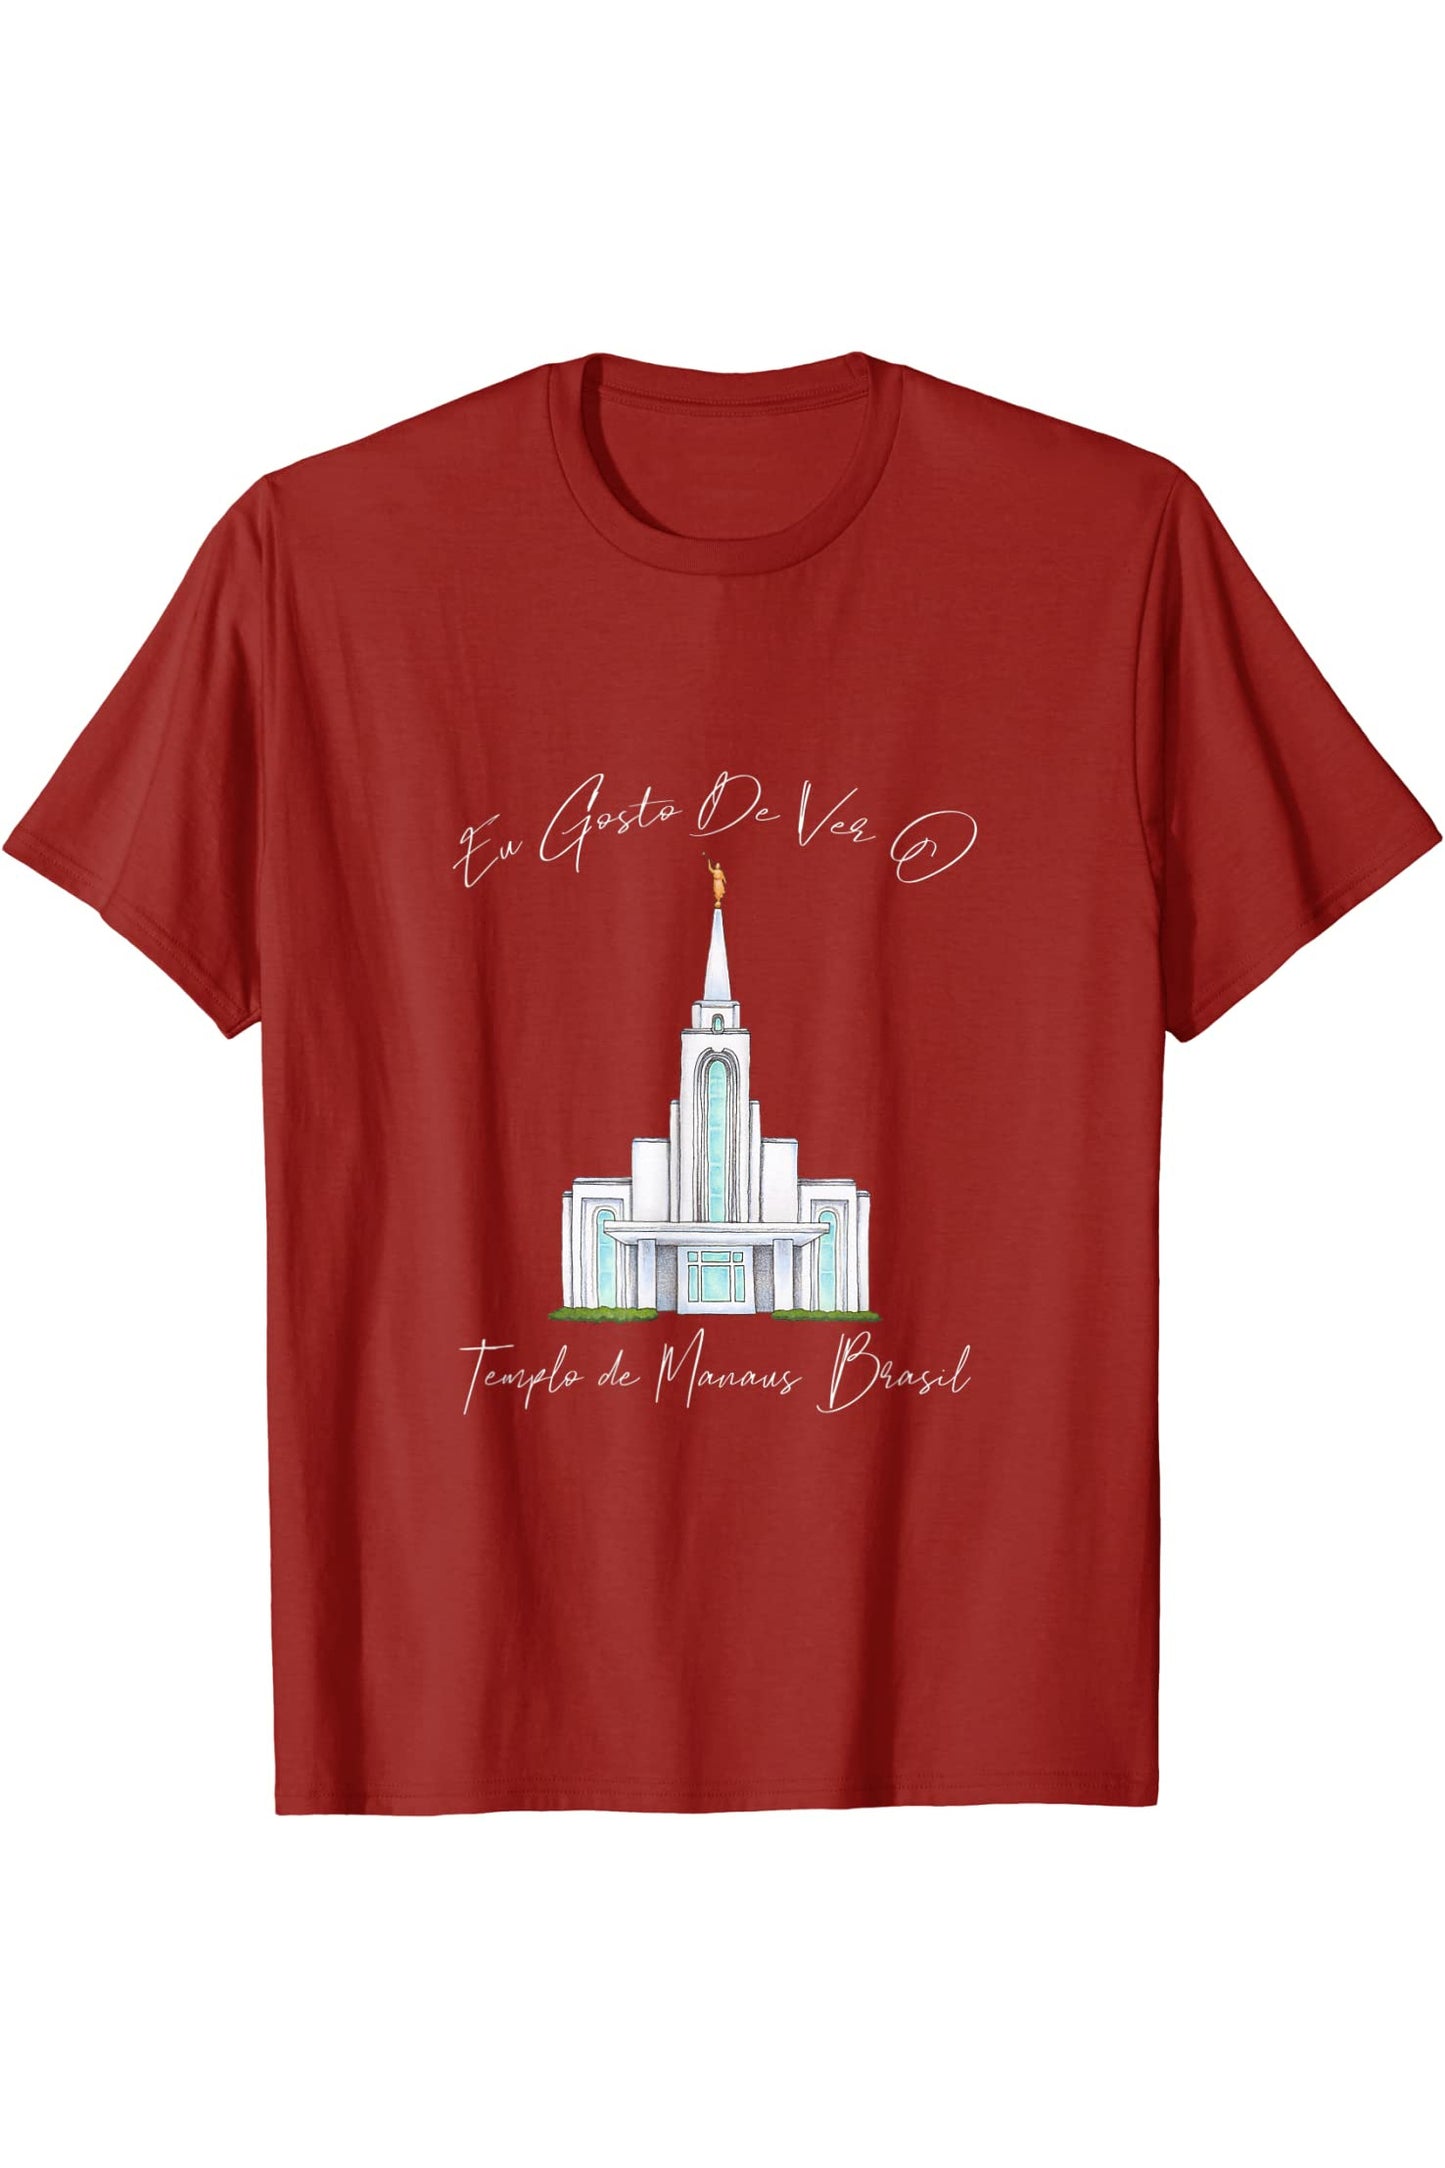 Templo de Manaus Brasil T-Shirt - Calligraphy Style (Portuguese) US